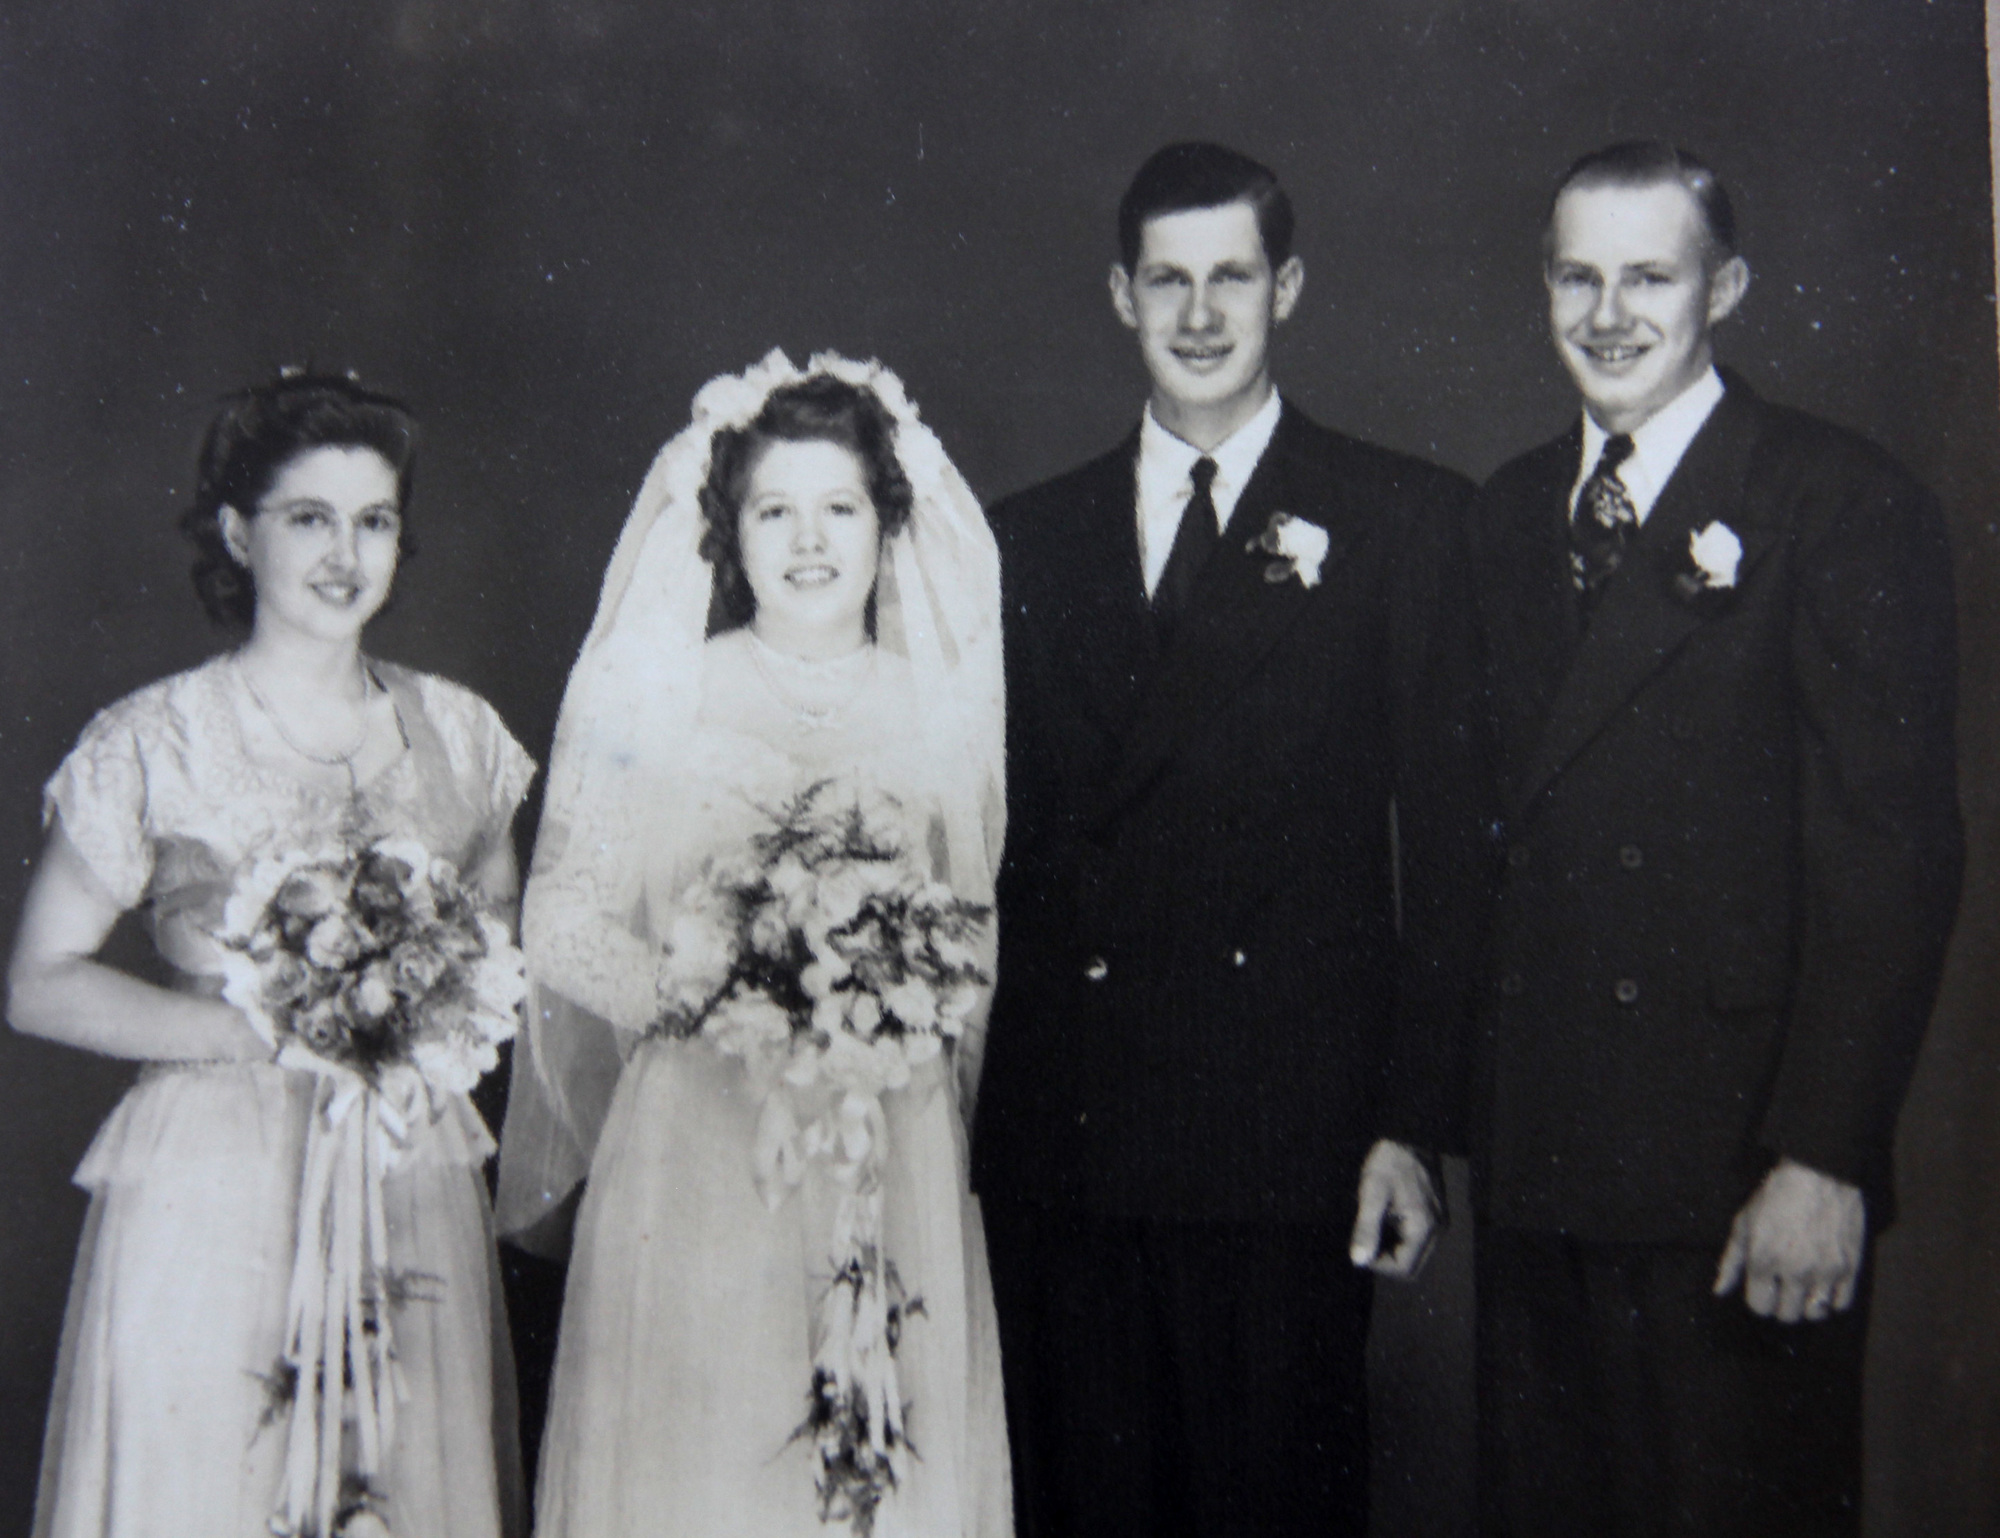 Ruth and Neil Van De Weert's wedding photo, Aug. 6, 1946. Courtesy photo